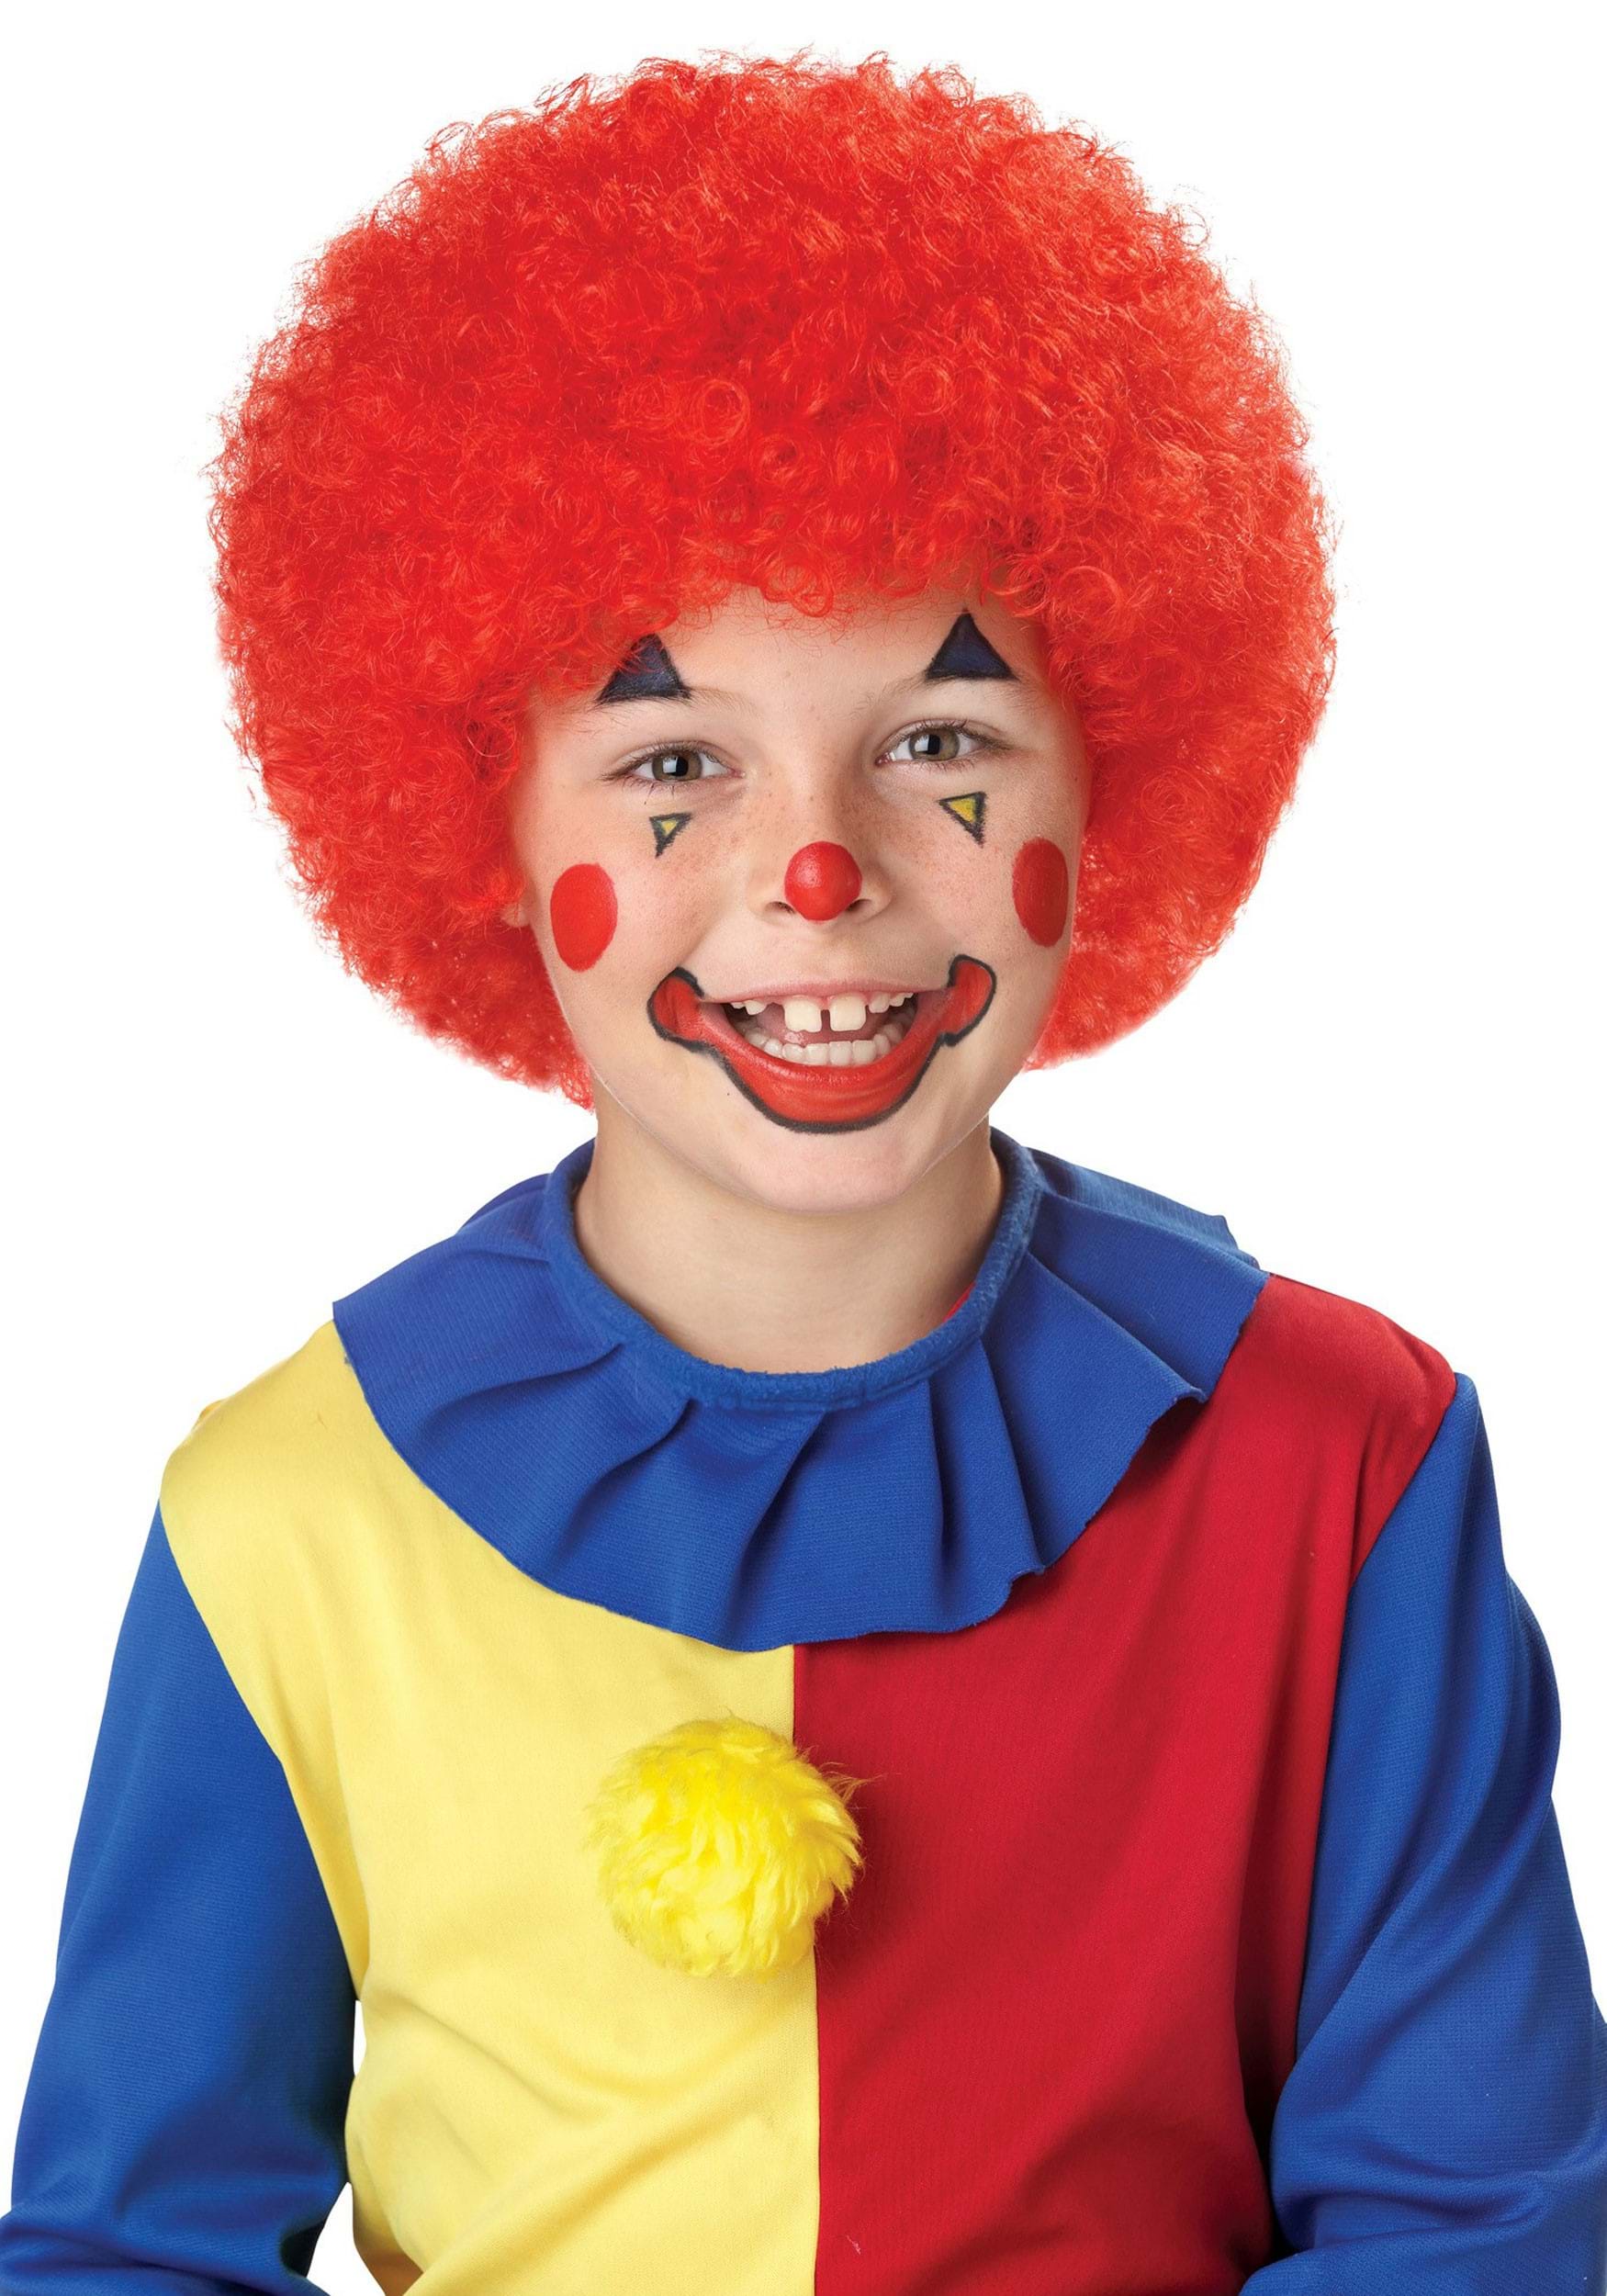 Kid's Red Clown Wig